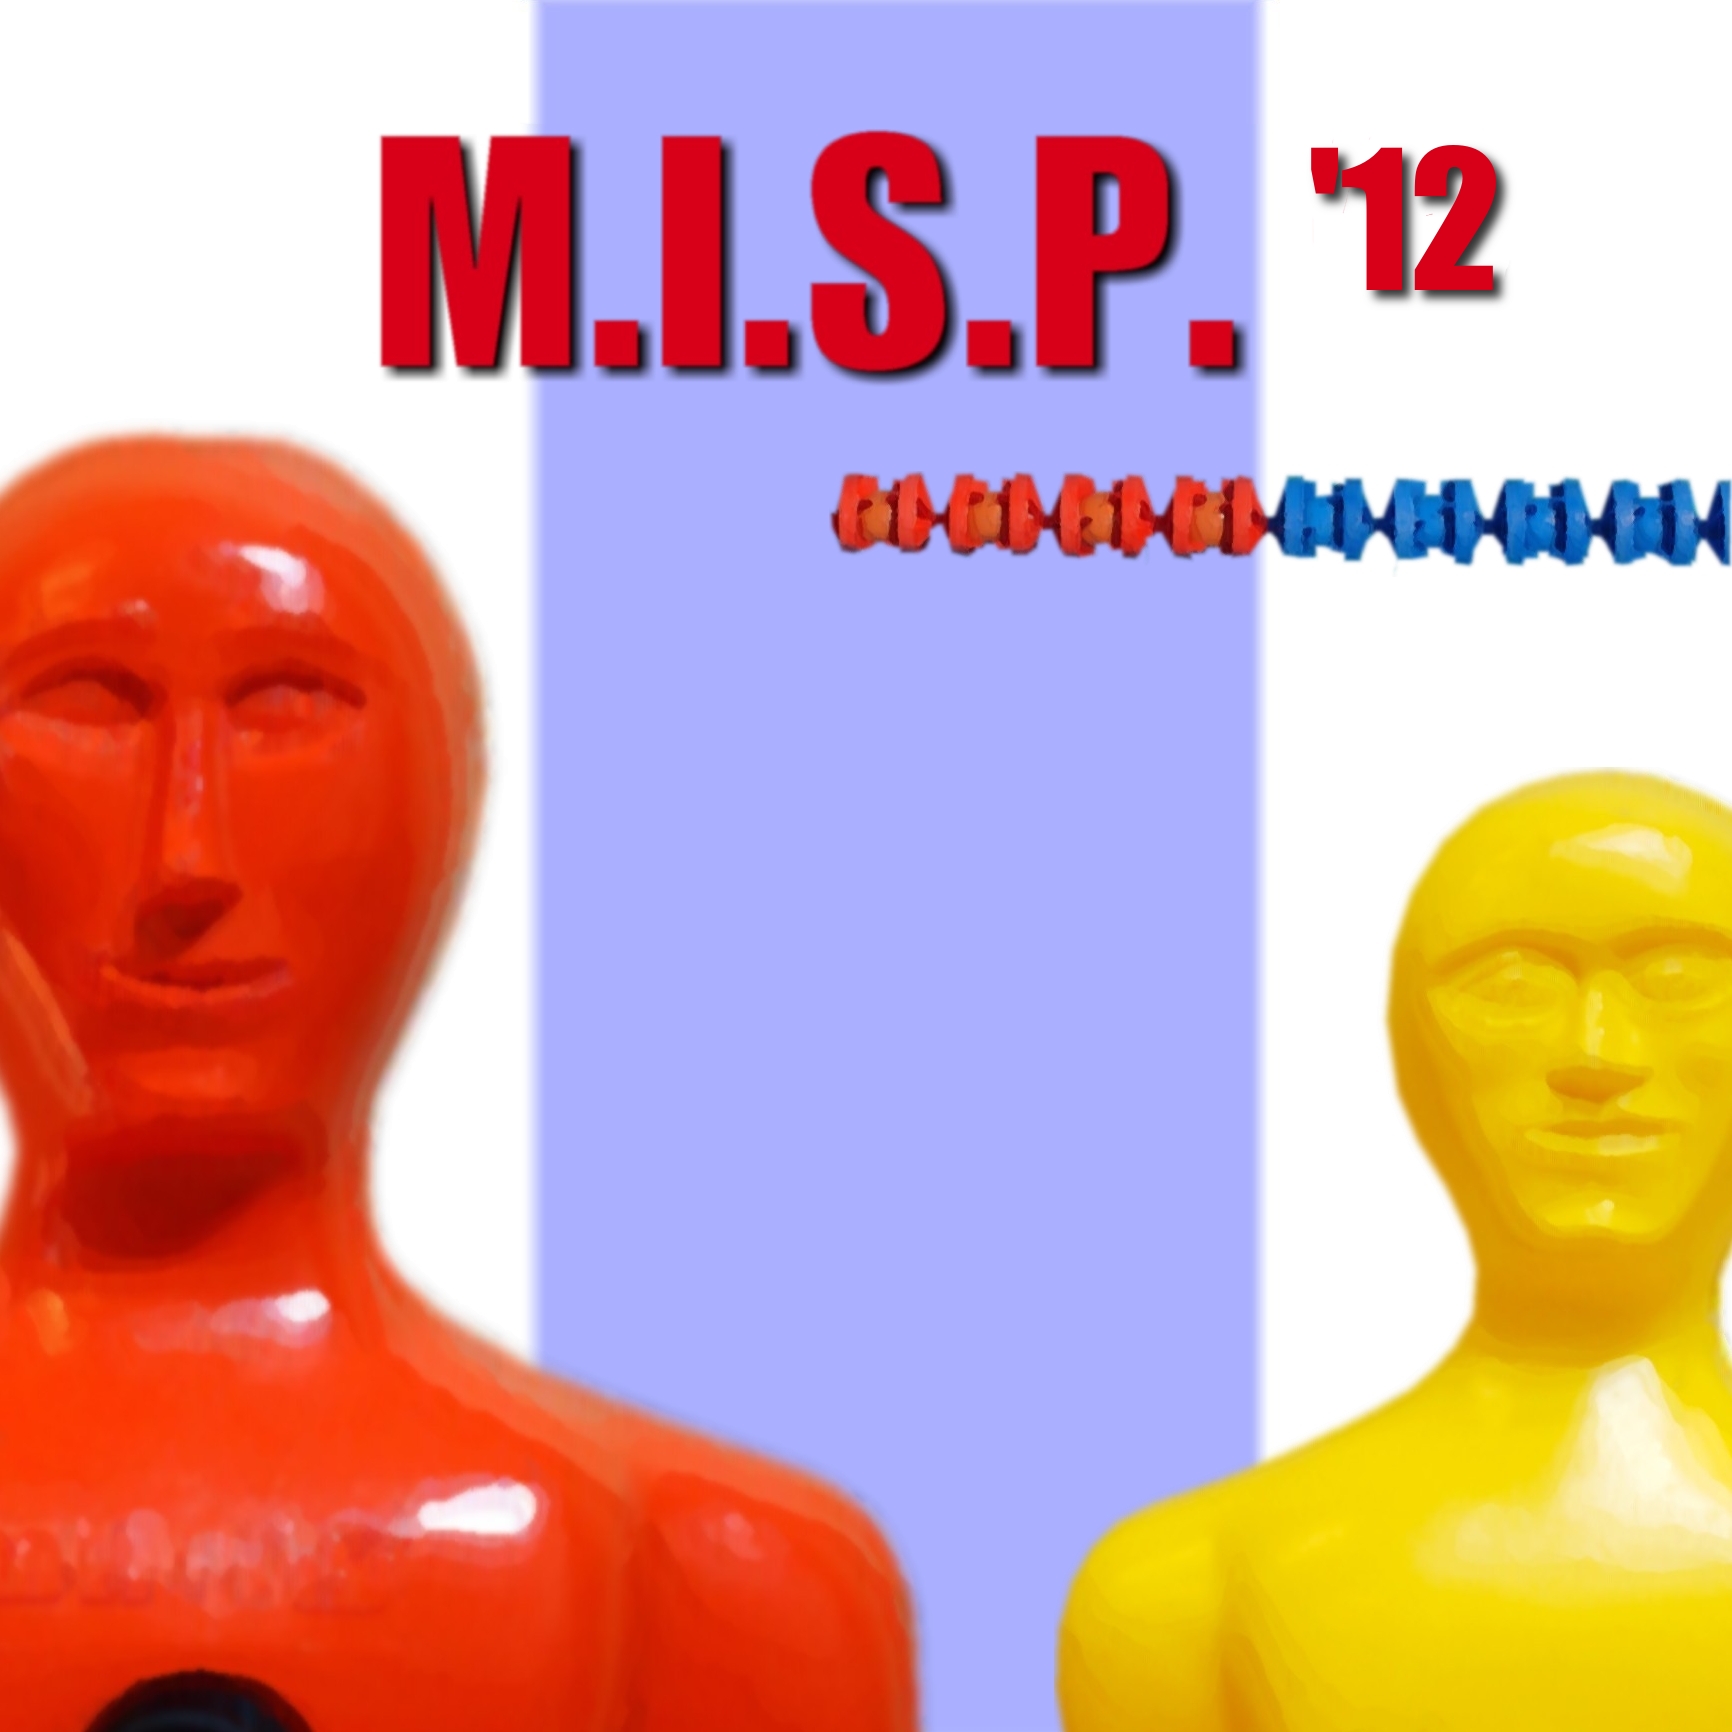 MISP12